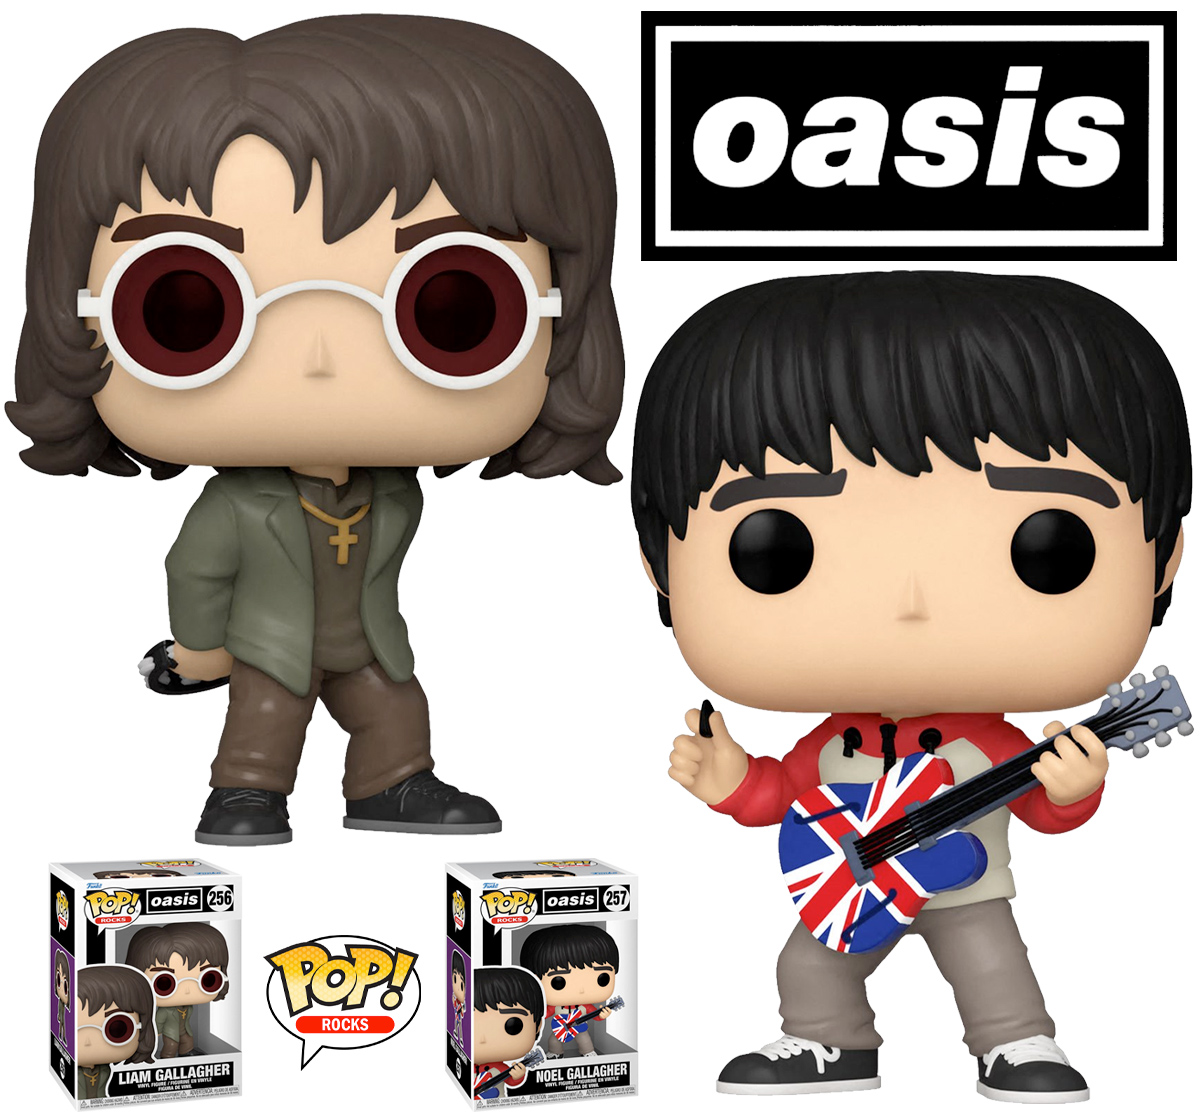 Bonecos Pop! Rocks Oasis com Liam e Noel Gallagher